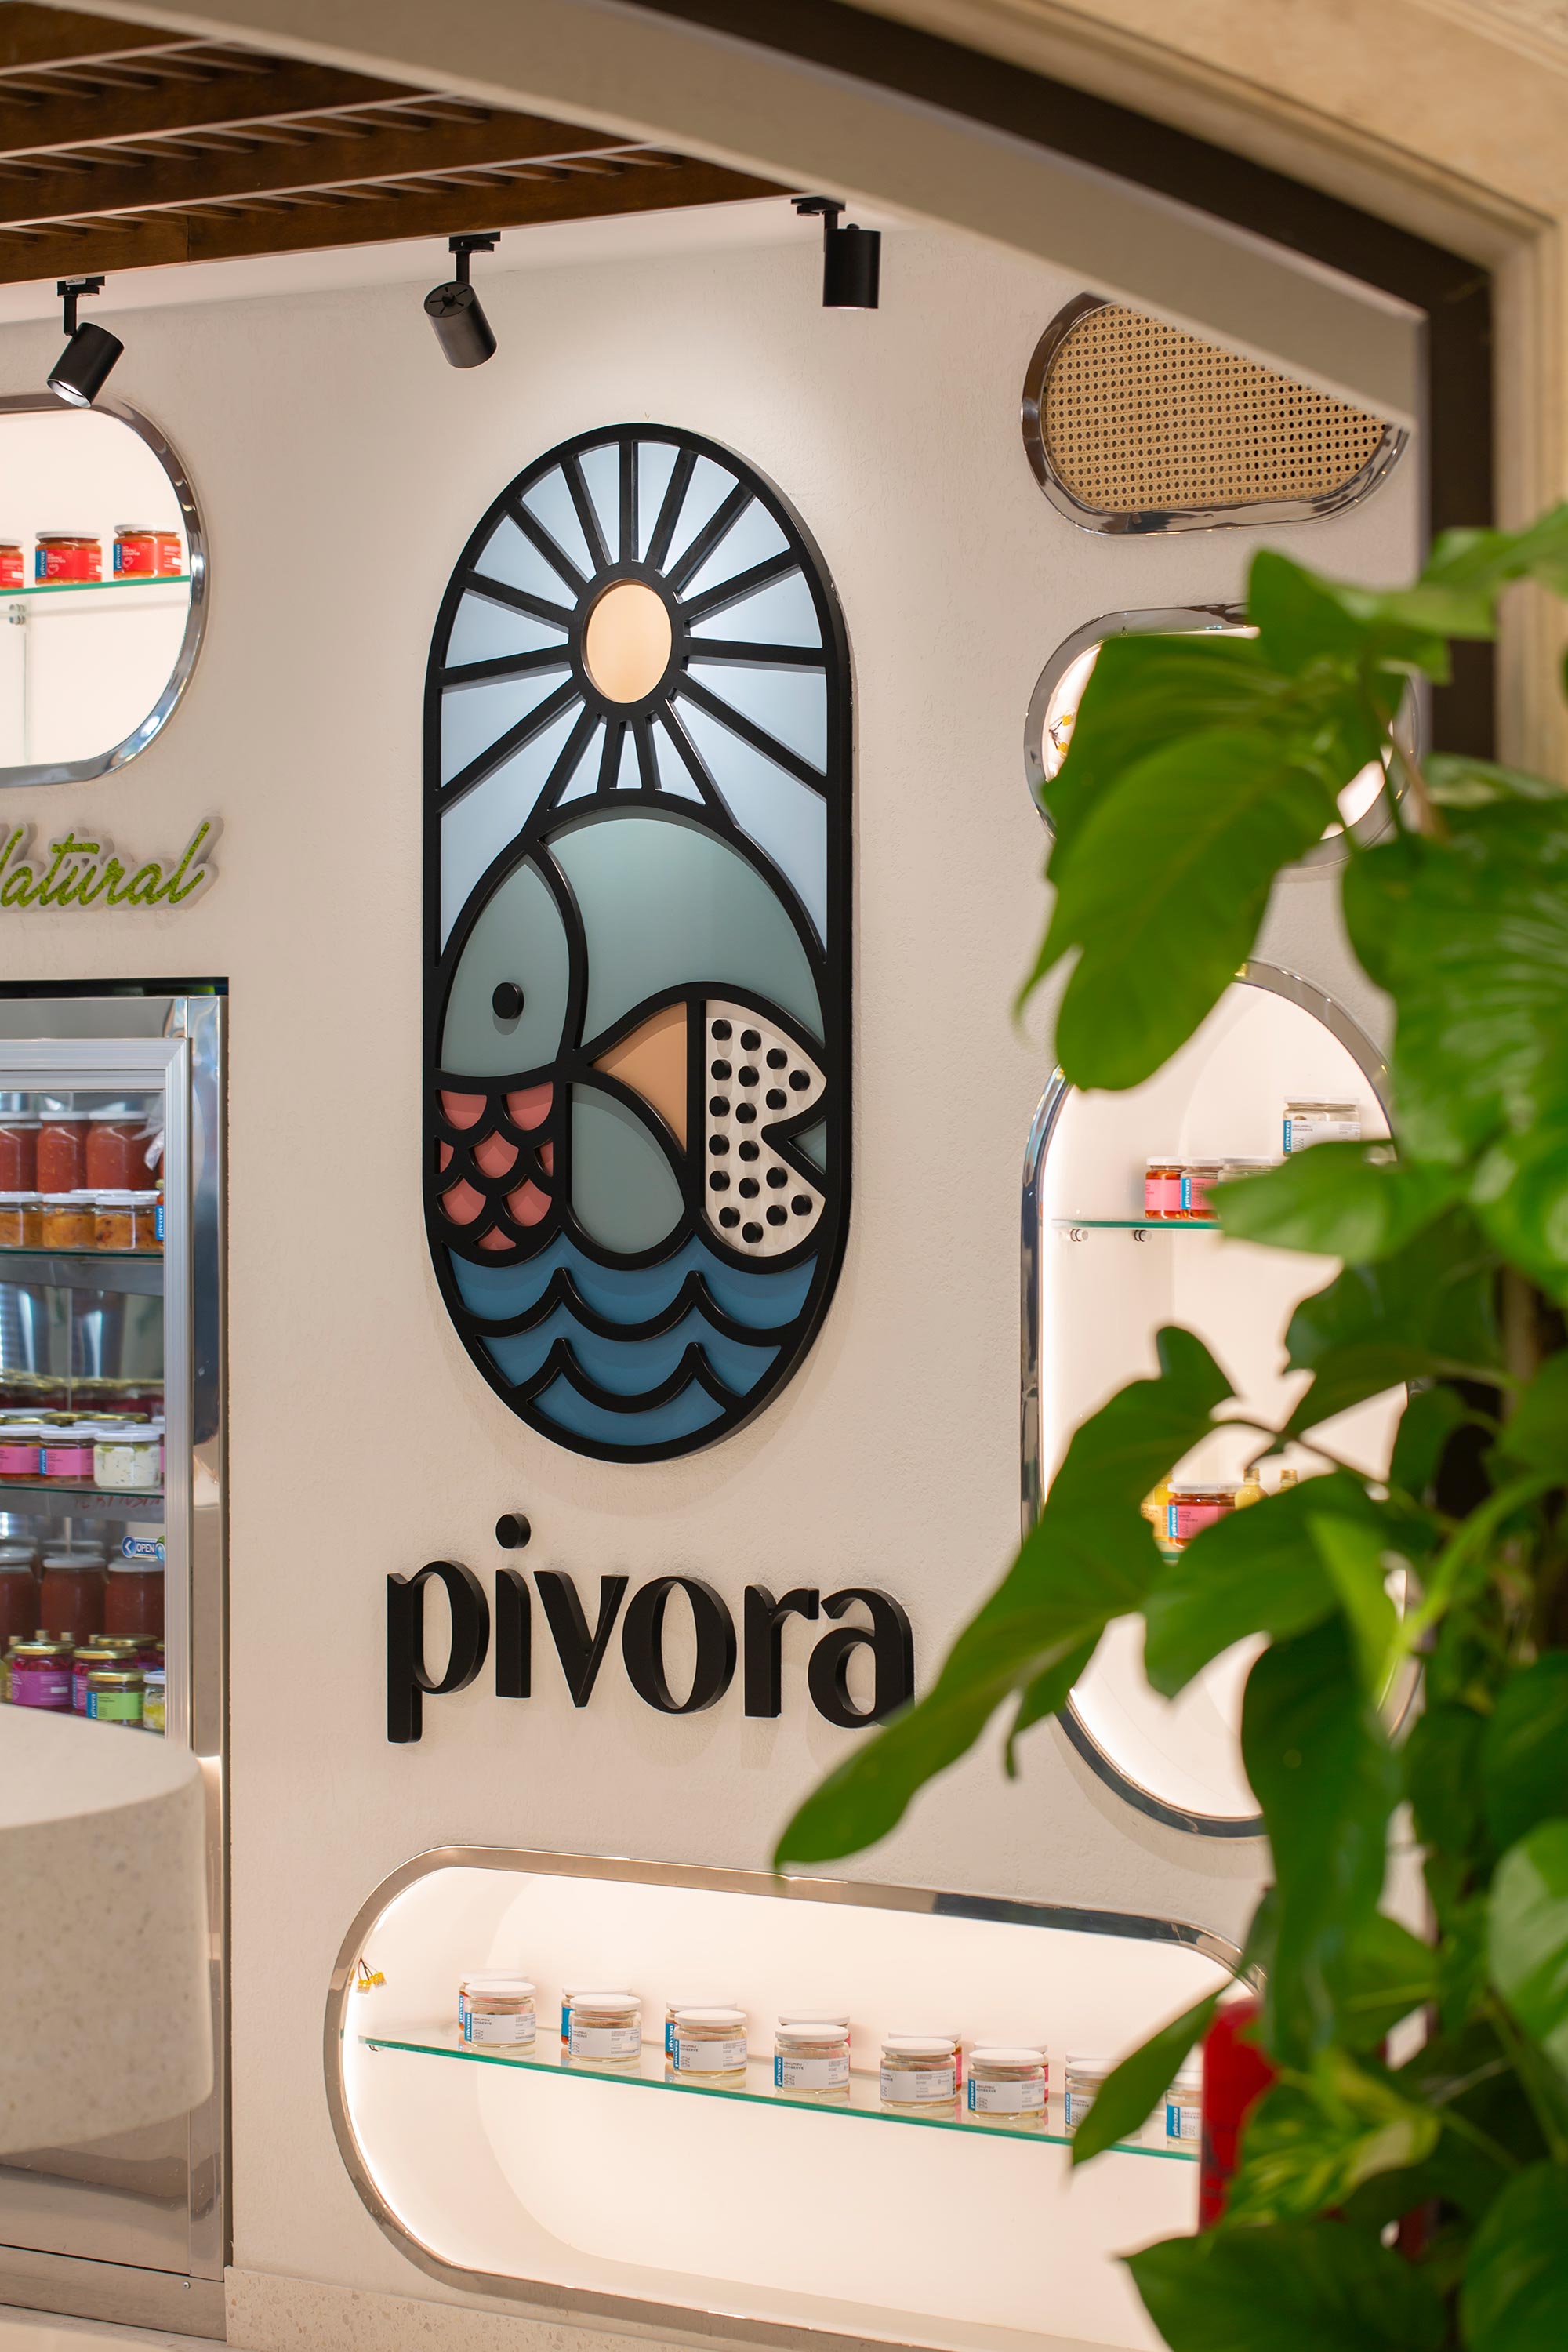 Pivora Restaurant - KONSEPTIZ Advertising Agency in Turkey